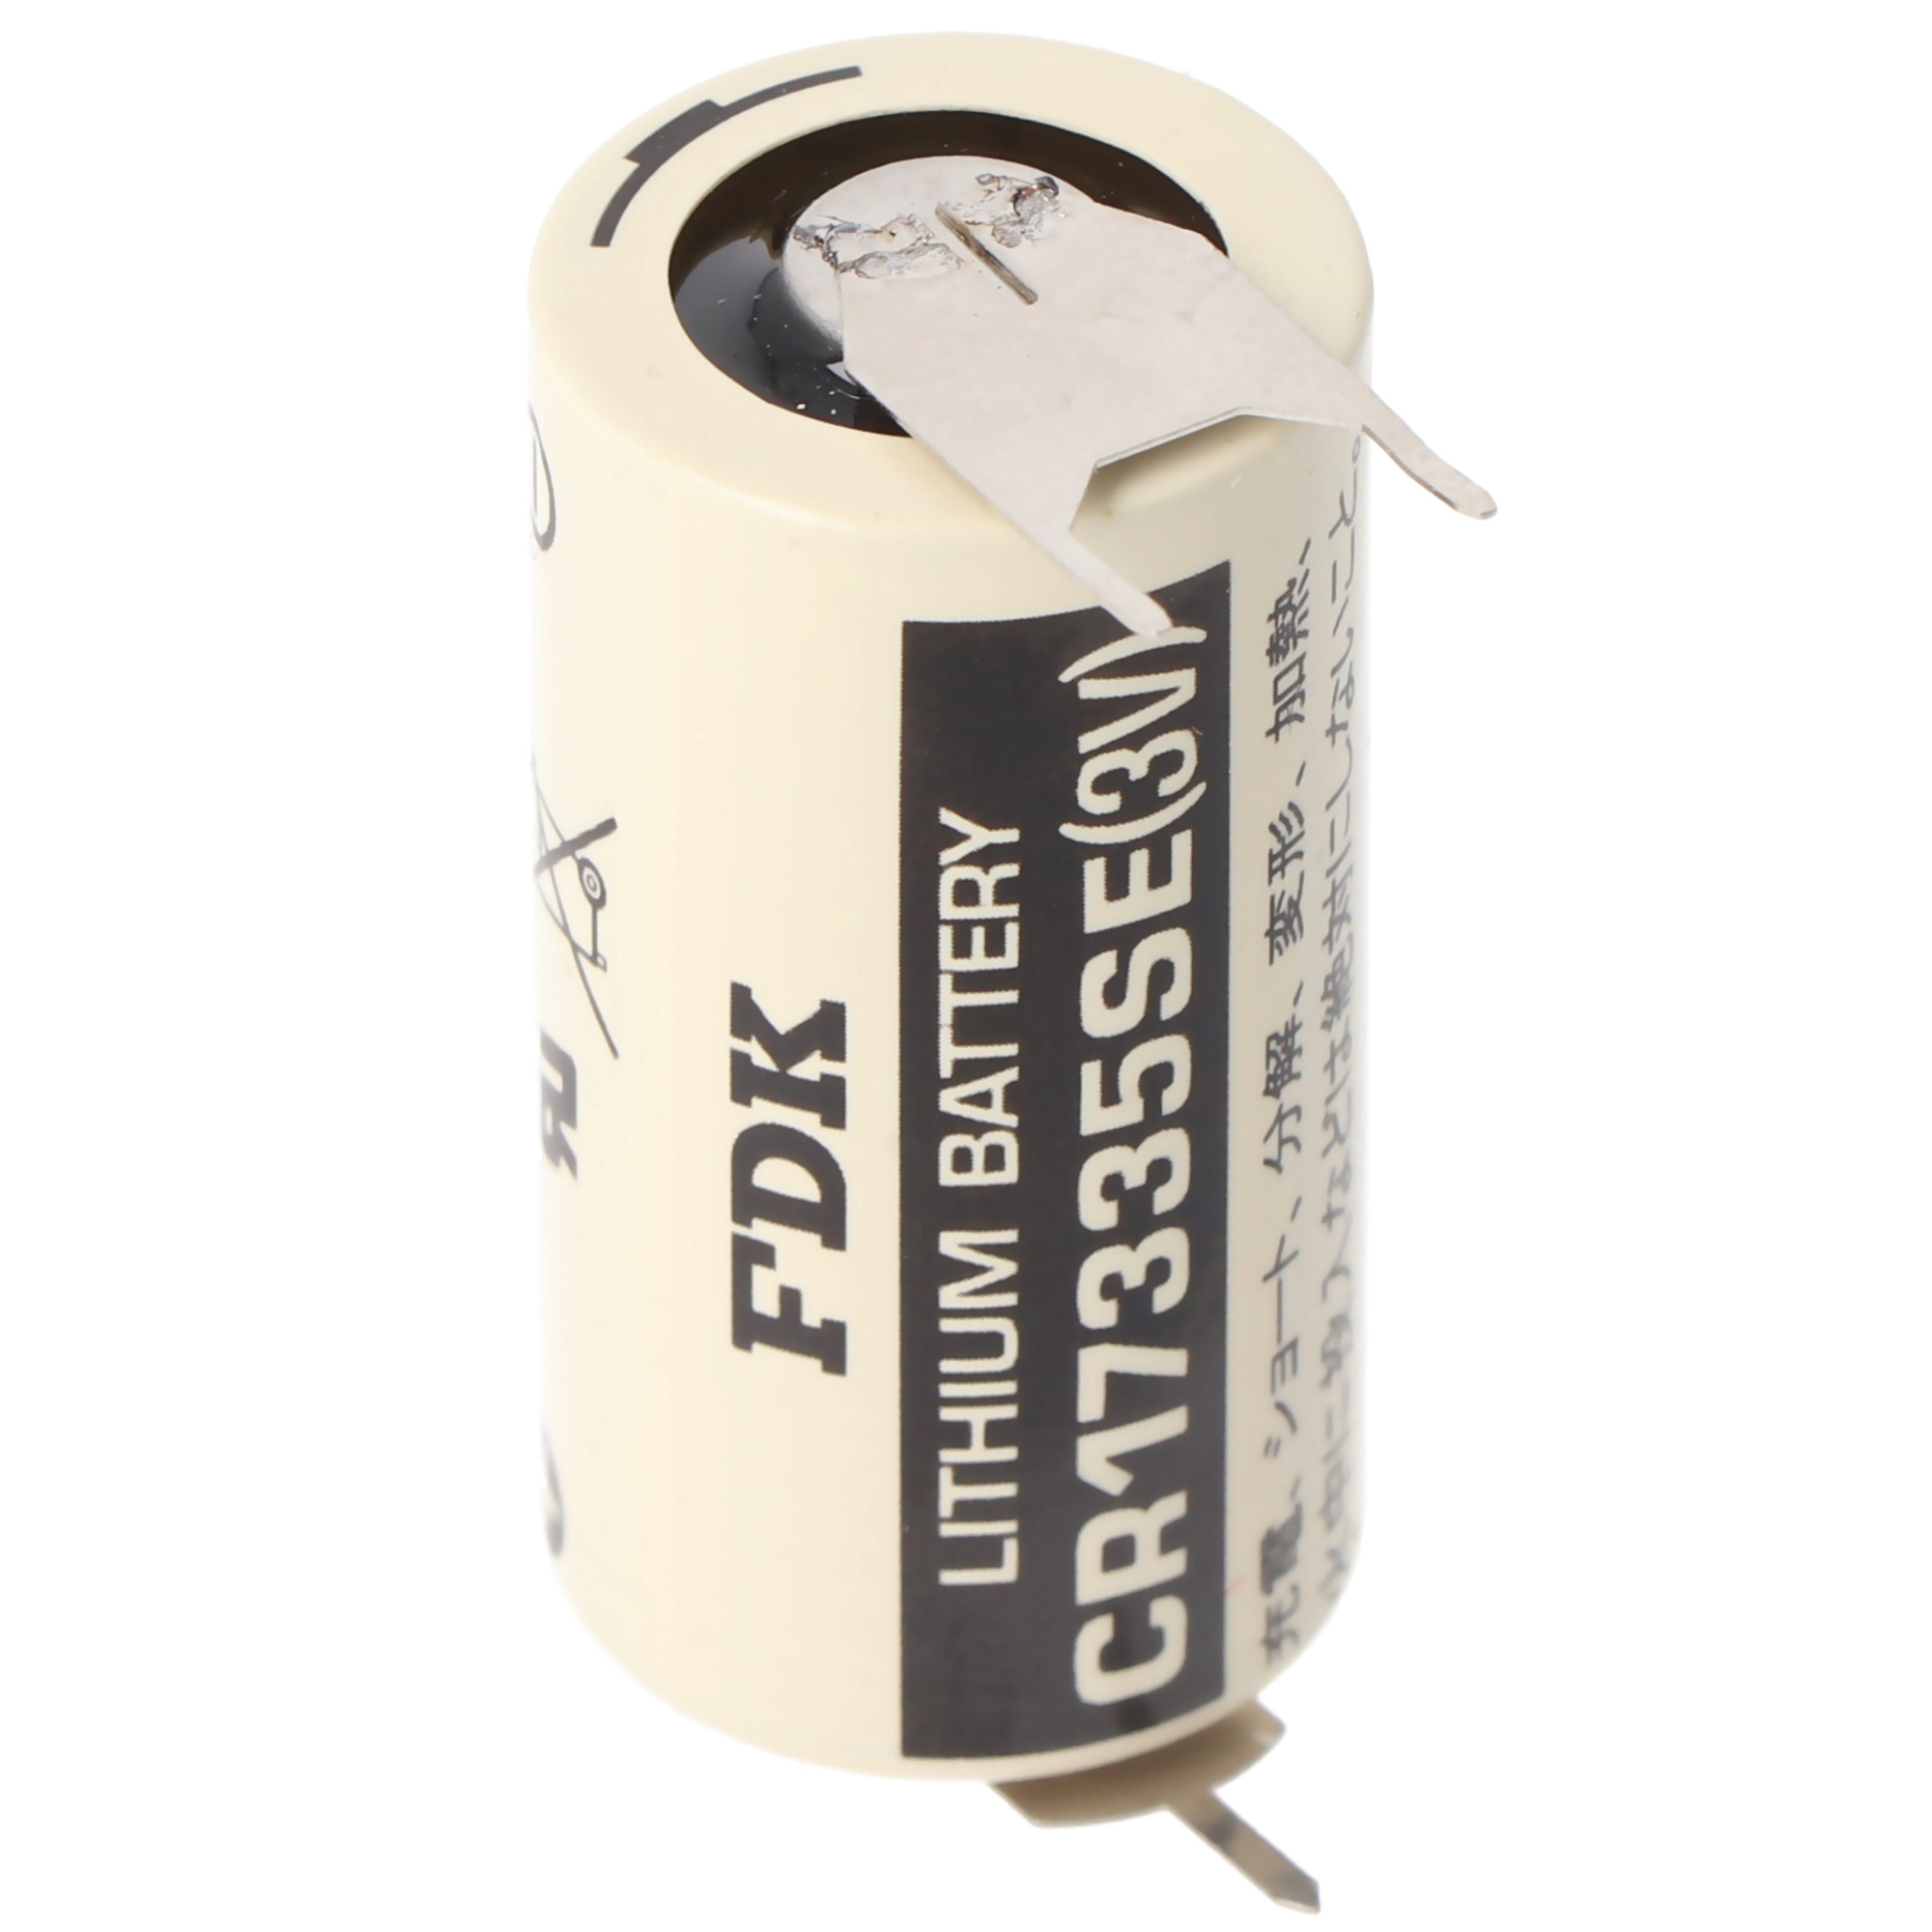 Sanyo Lithium Batterie CR17335 SE Size 2/3A, 3er Print Lötfahnen, Rastermaß 7,6mm